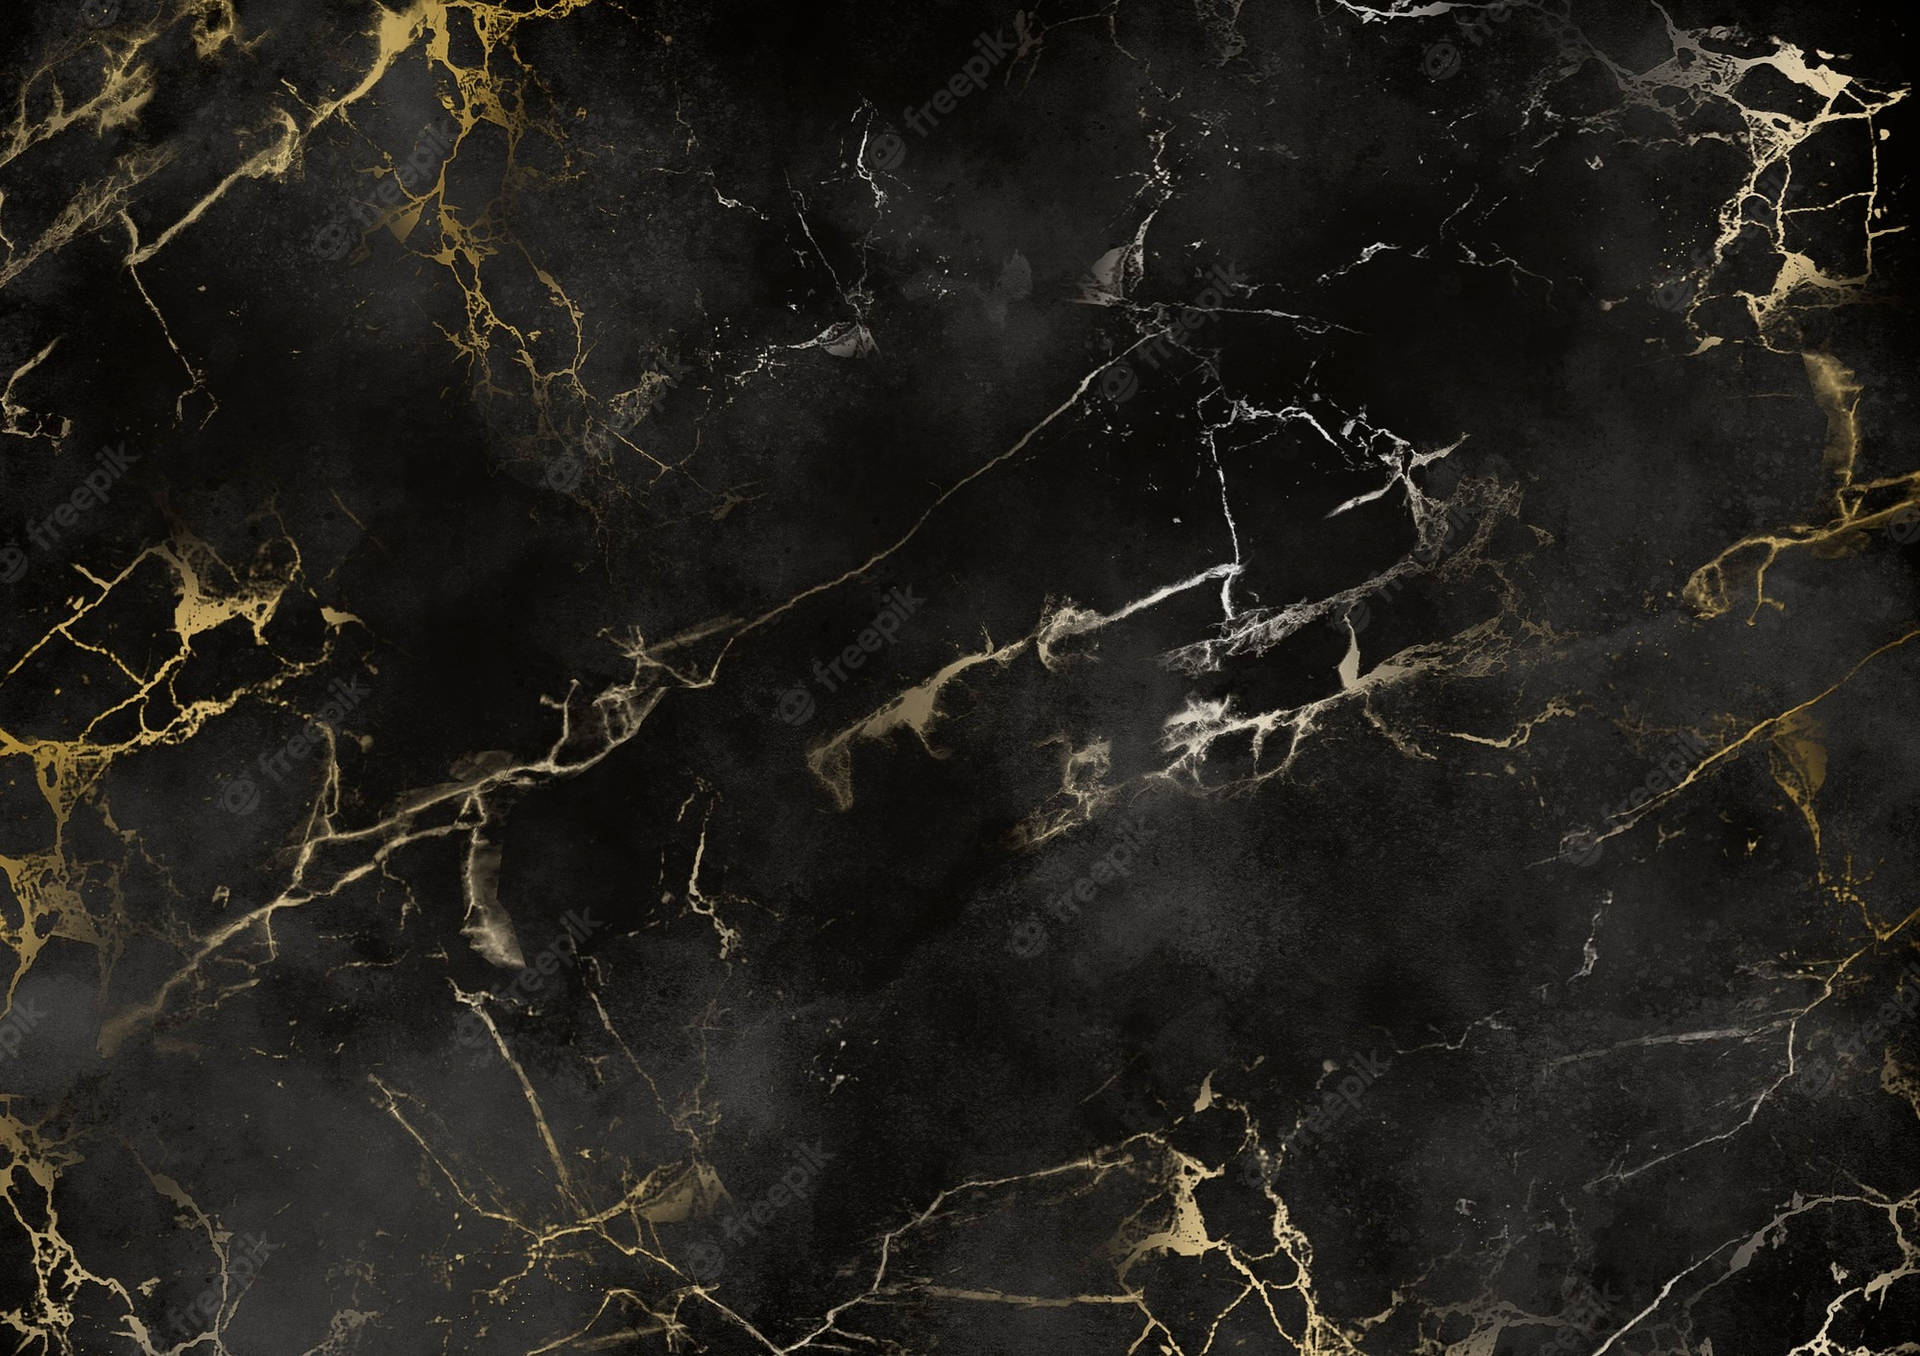 Caption: Enigmatic Black Marble - Exquisite 4K Display Wallpaper